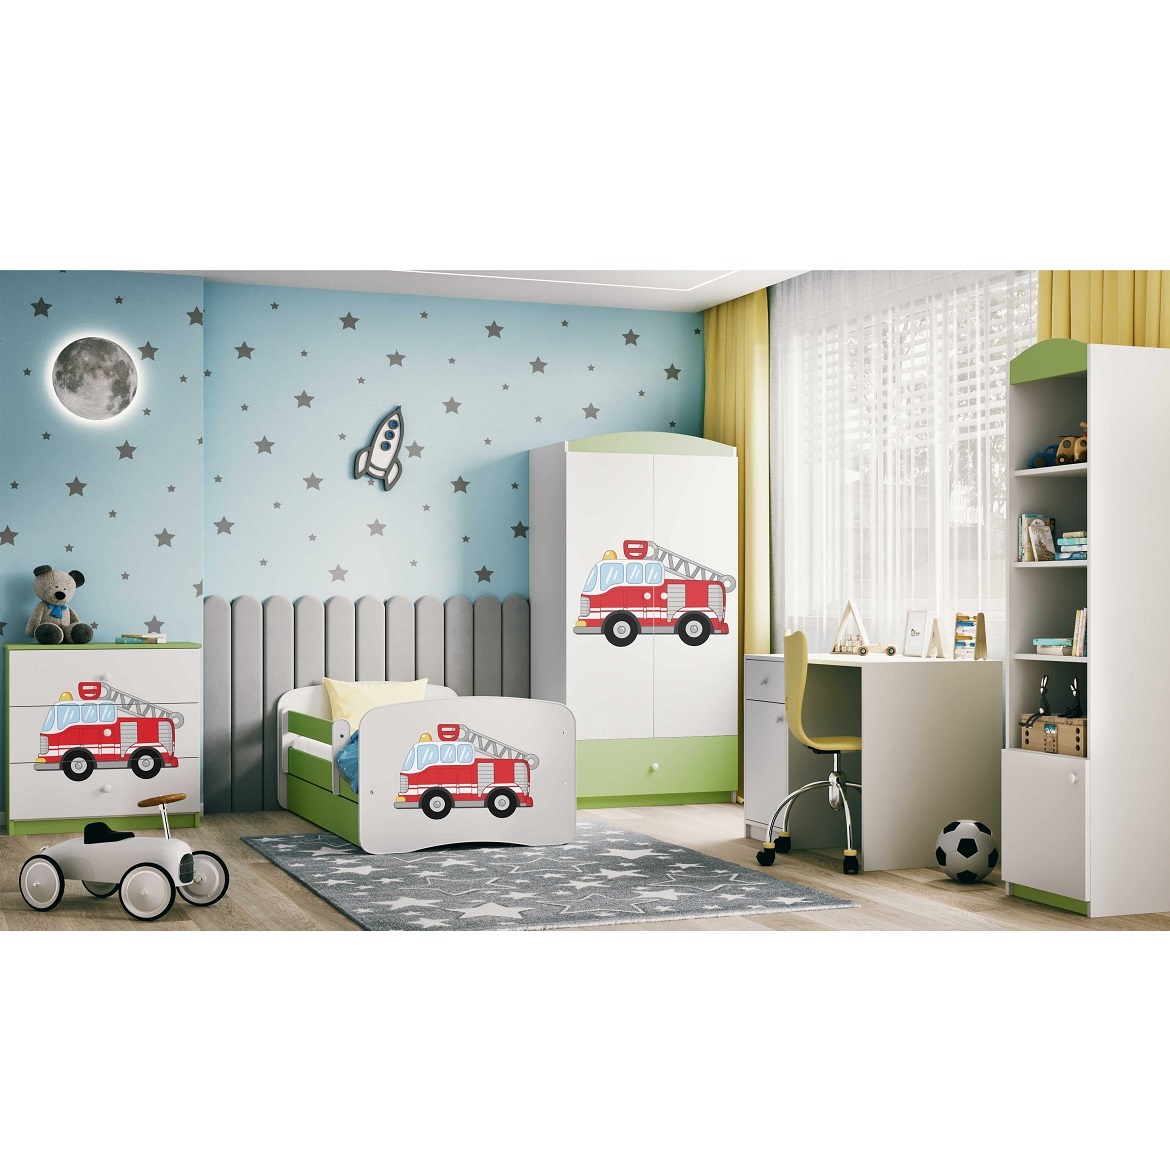 Kinderbett Babydreams+SZ grün 80x160 Feuerwehrauto,5